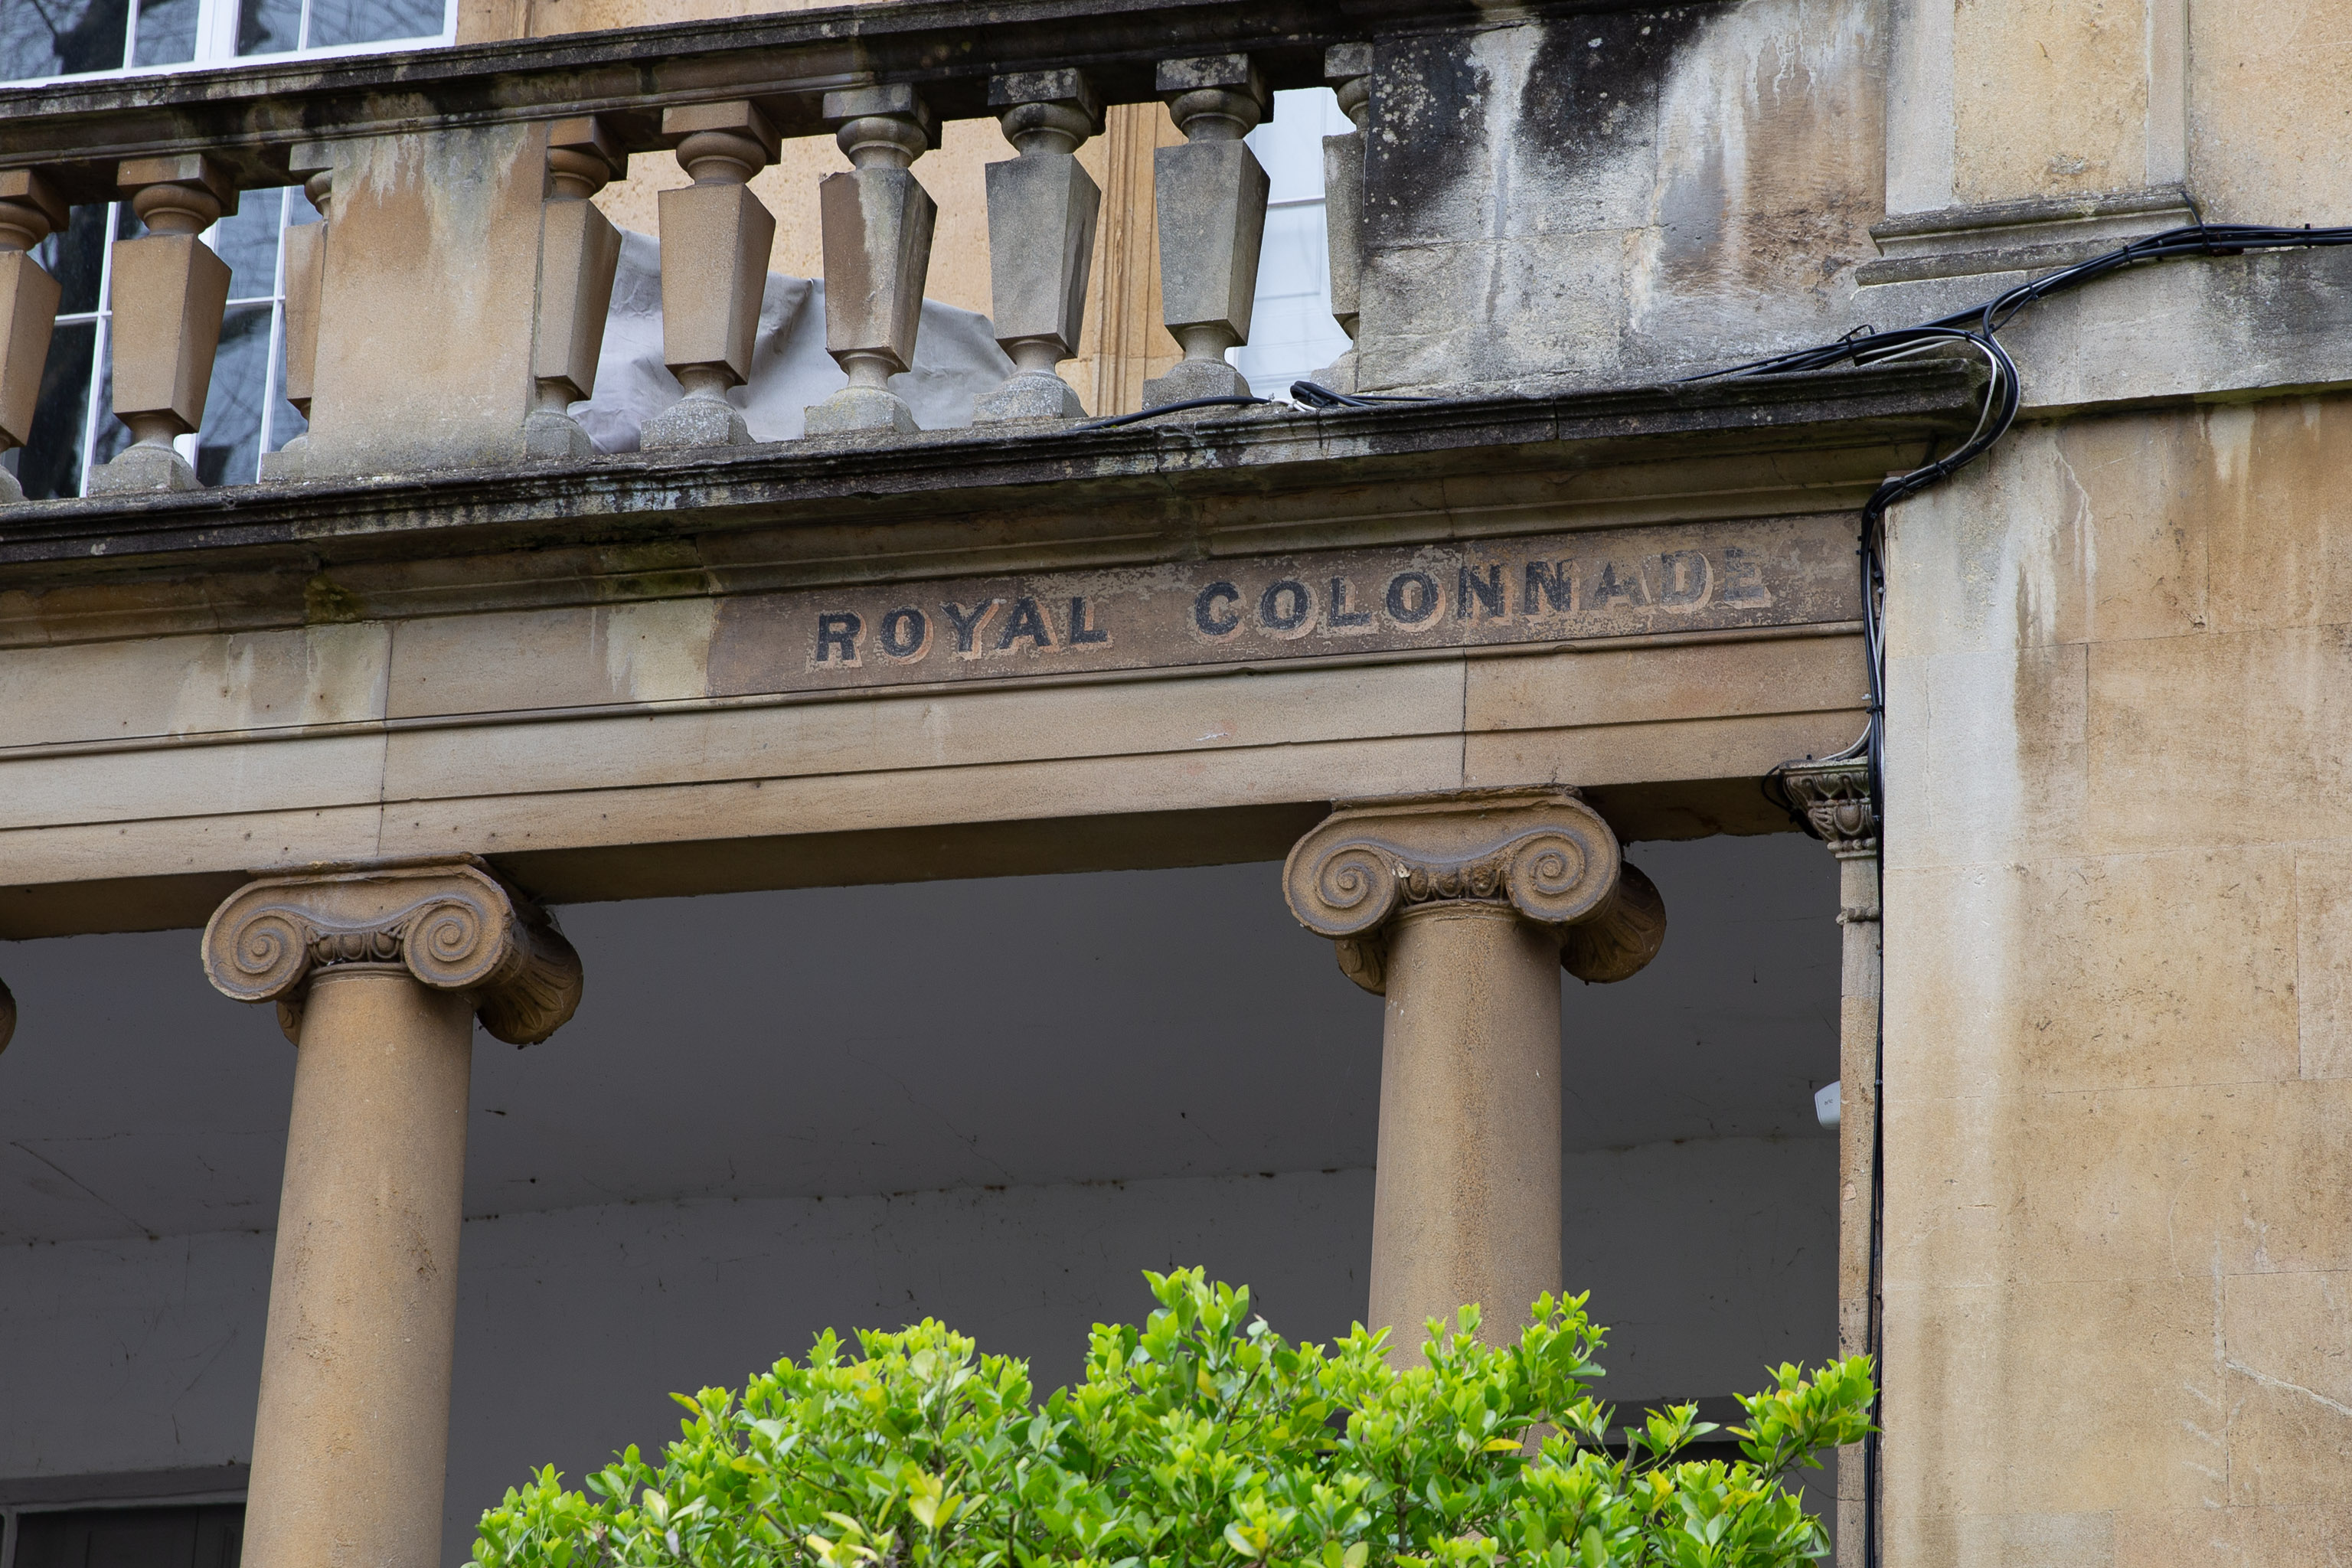 Royal Colonnade
Nice volutes.
